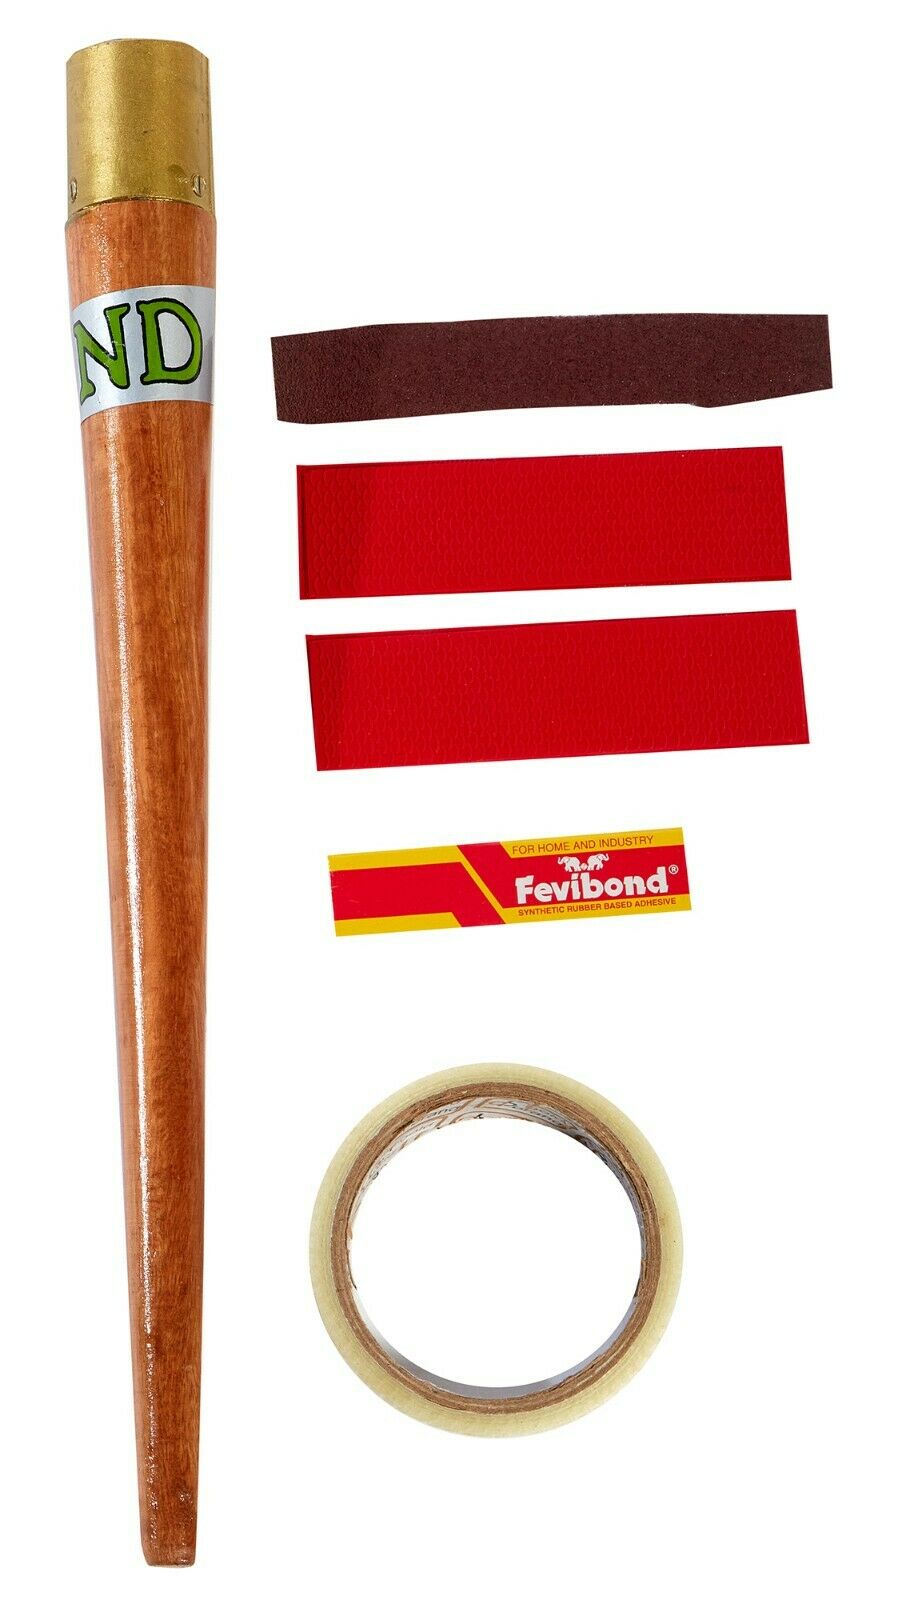 ND Cricket Toe Guard Cricket Bat repair kit set protection & Grip Cone